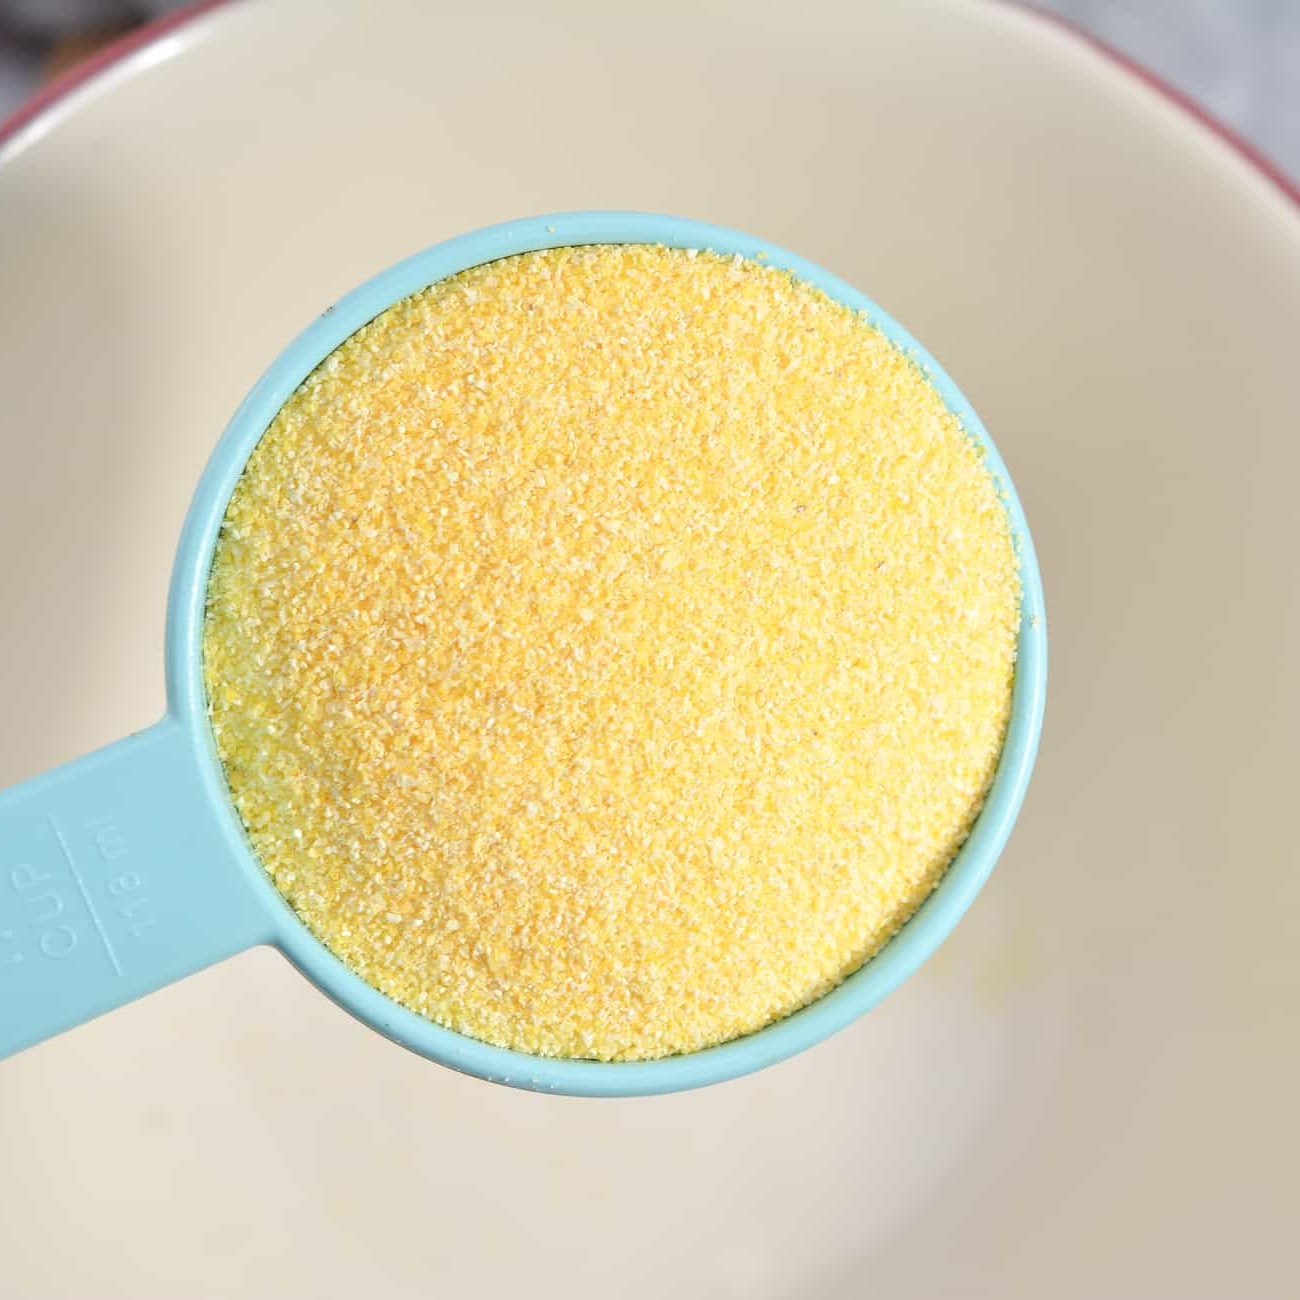 In a bowl, add the cornmeal.